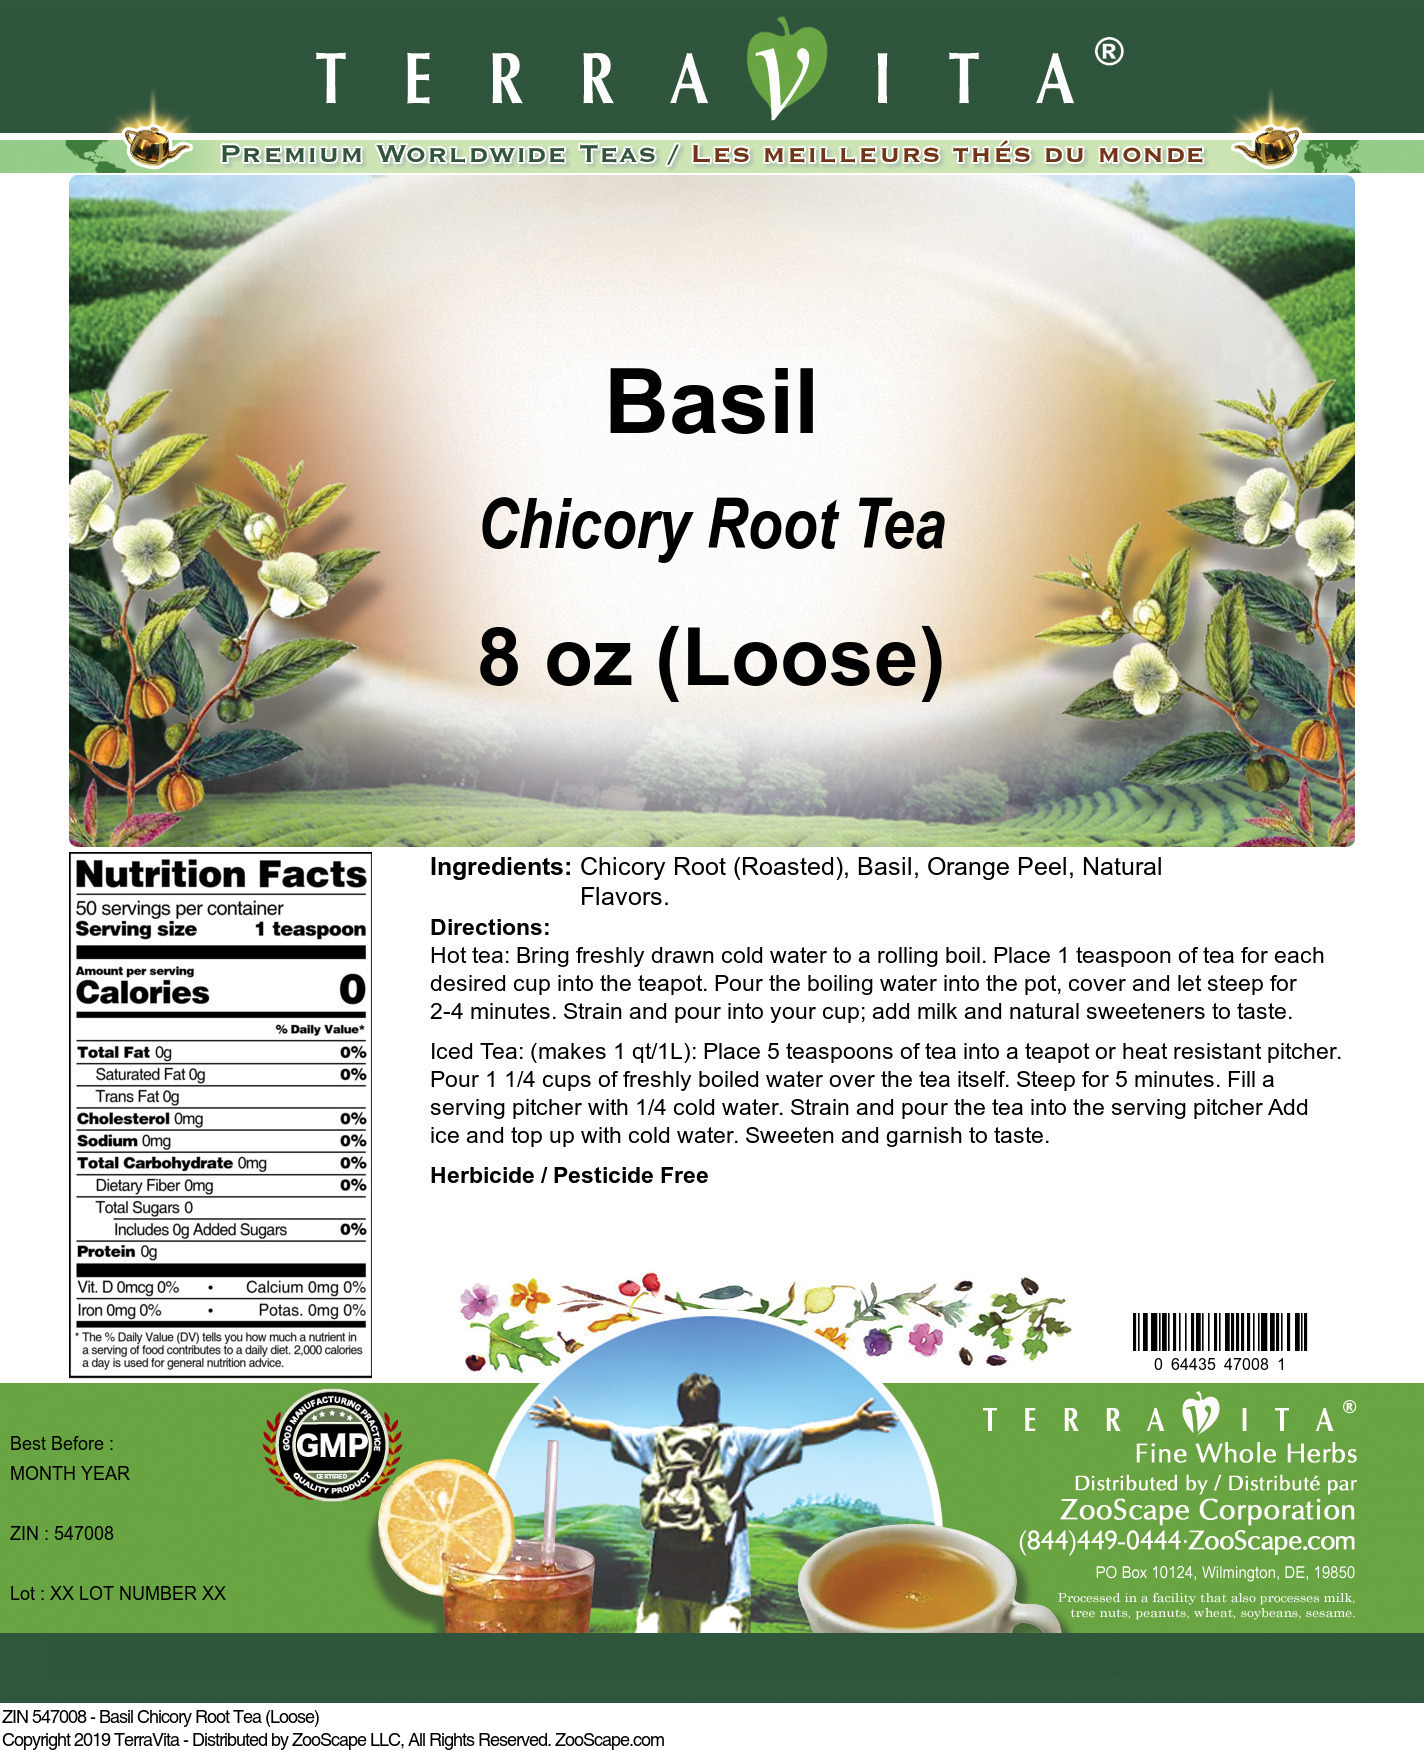 Basil Chicory Root Tea (Loose) - Label